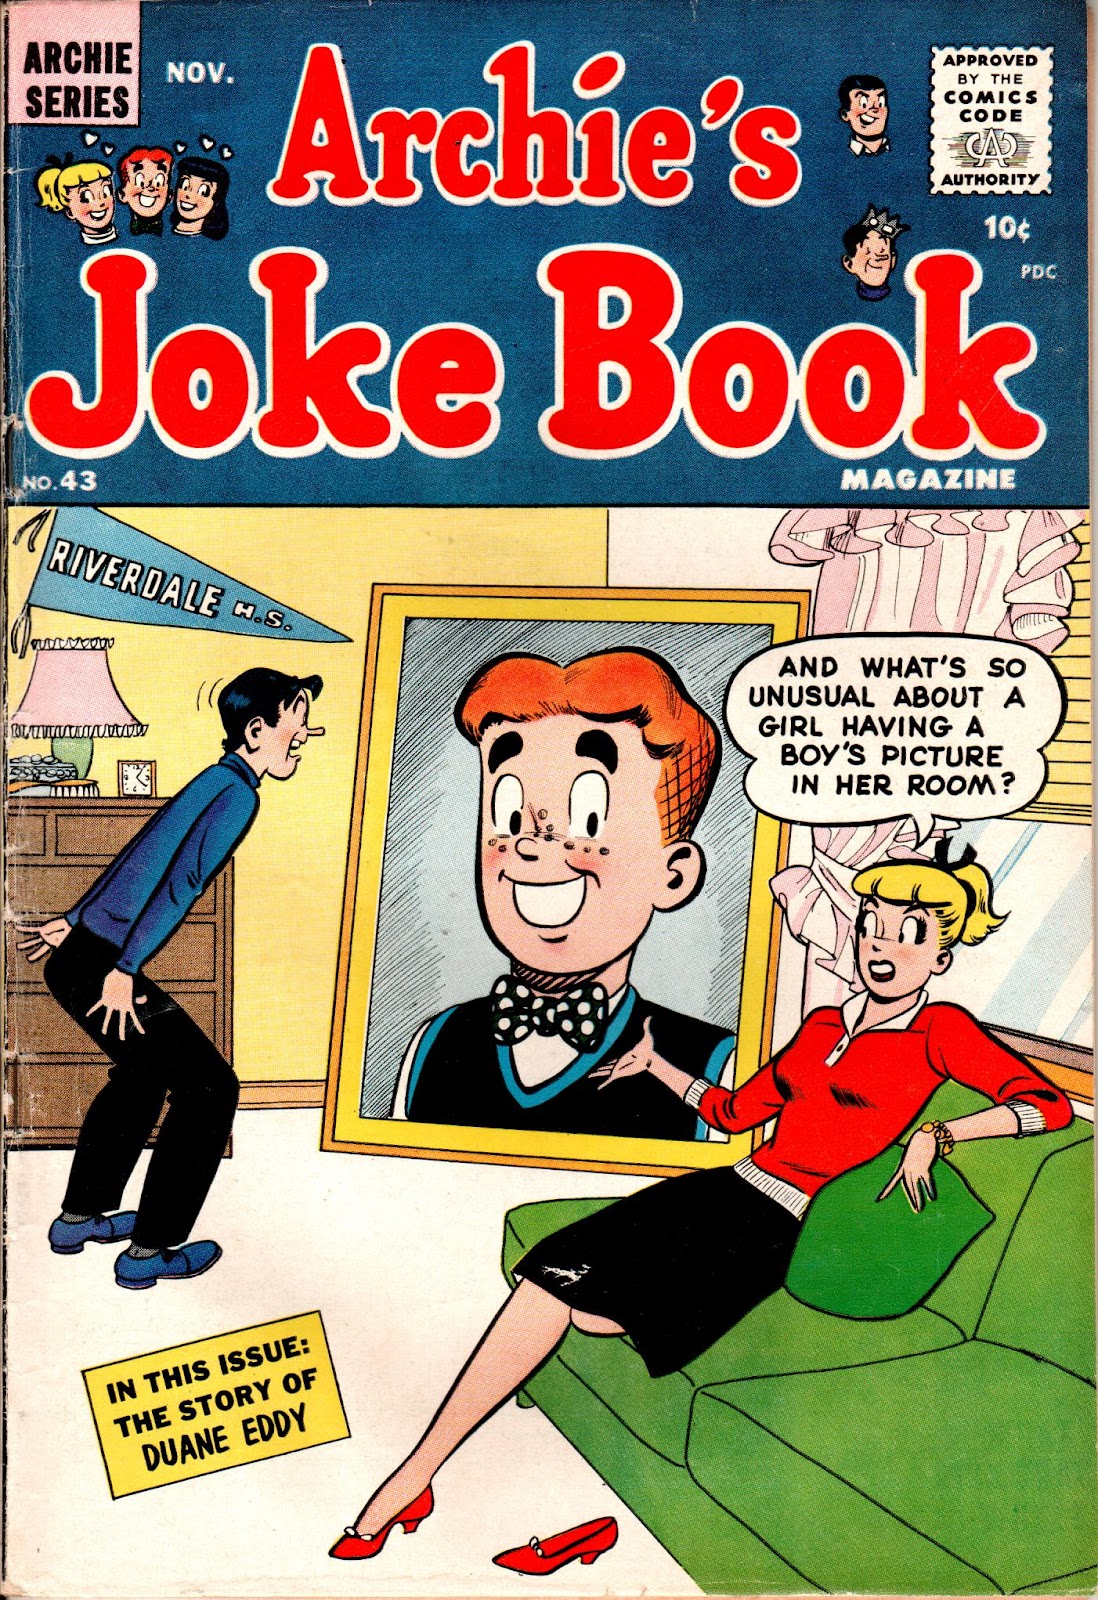 Archie's Joke Book Magazine issue 43 - Page 1